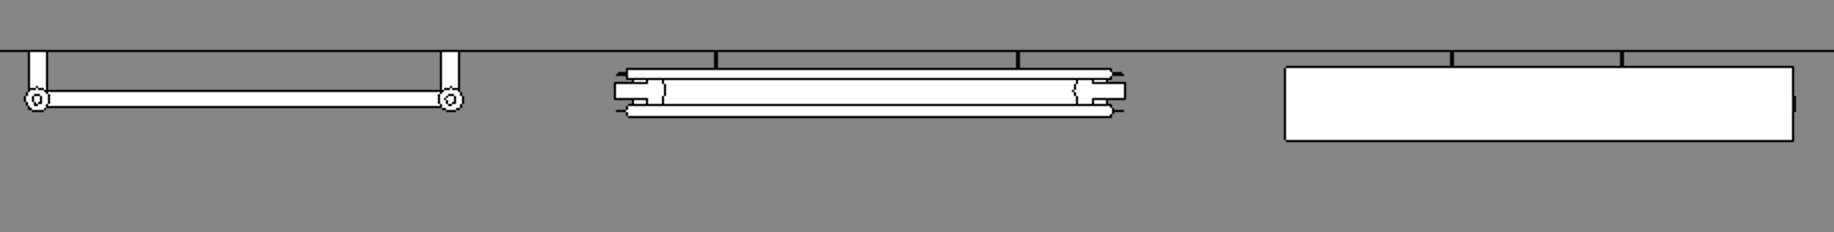 Image showing towel rail and radiators plan view.